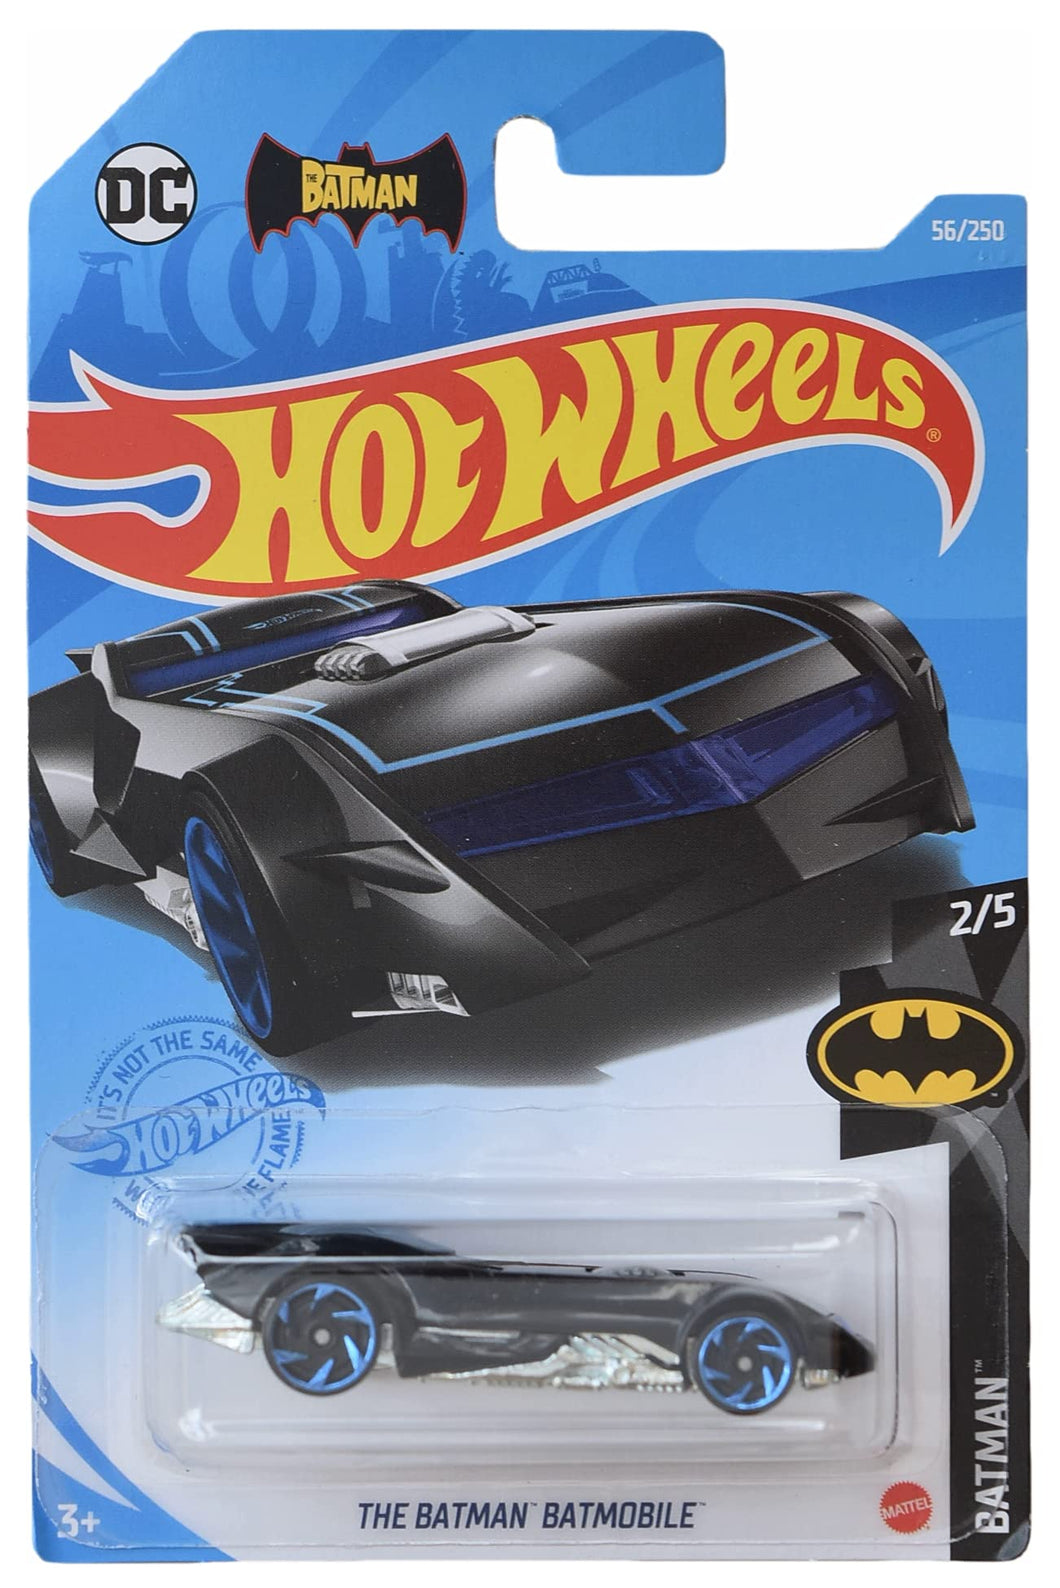 Hot Wheels The Batman Batmobile, Batman 2/5 Black/blue 56/250